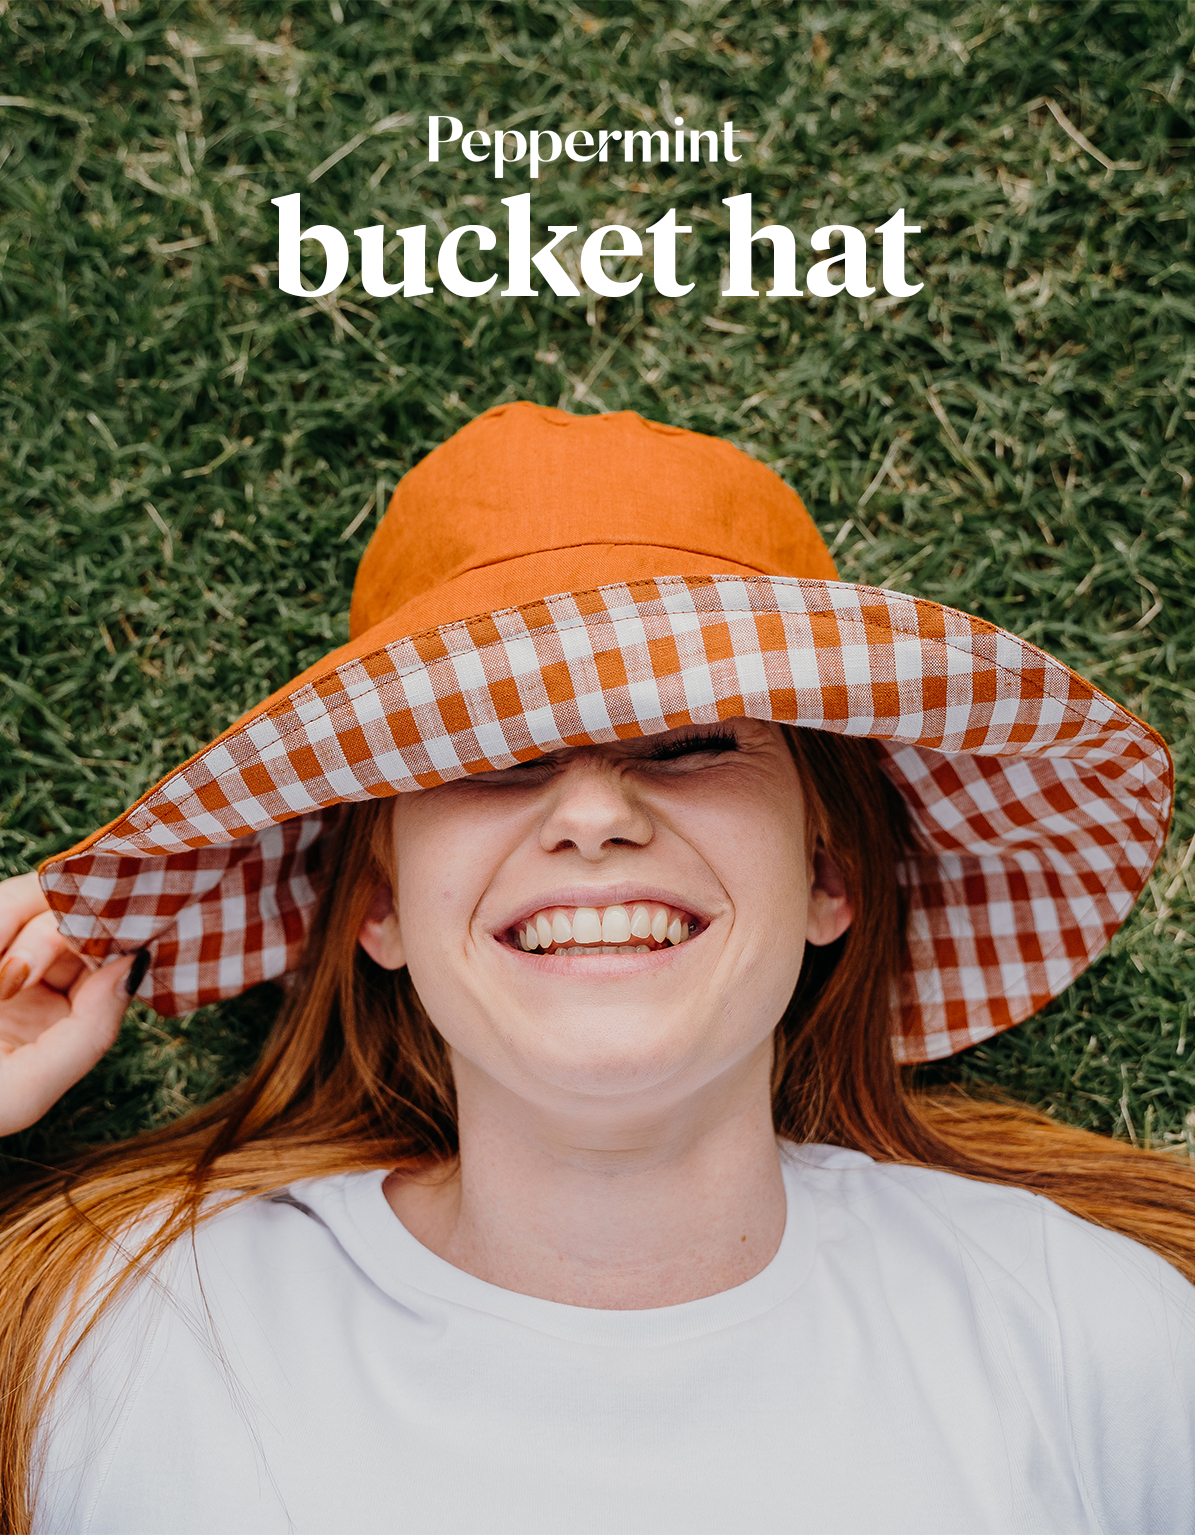 Peppermint Bucket Hat - DIY Project! - peppermint magazine